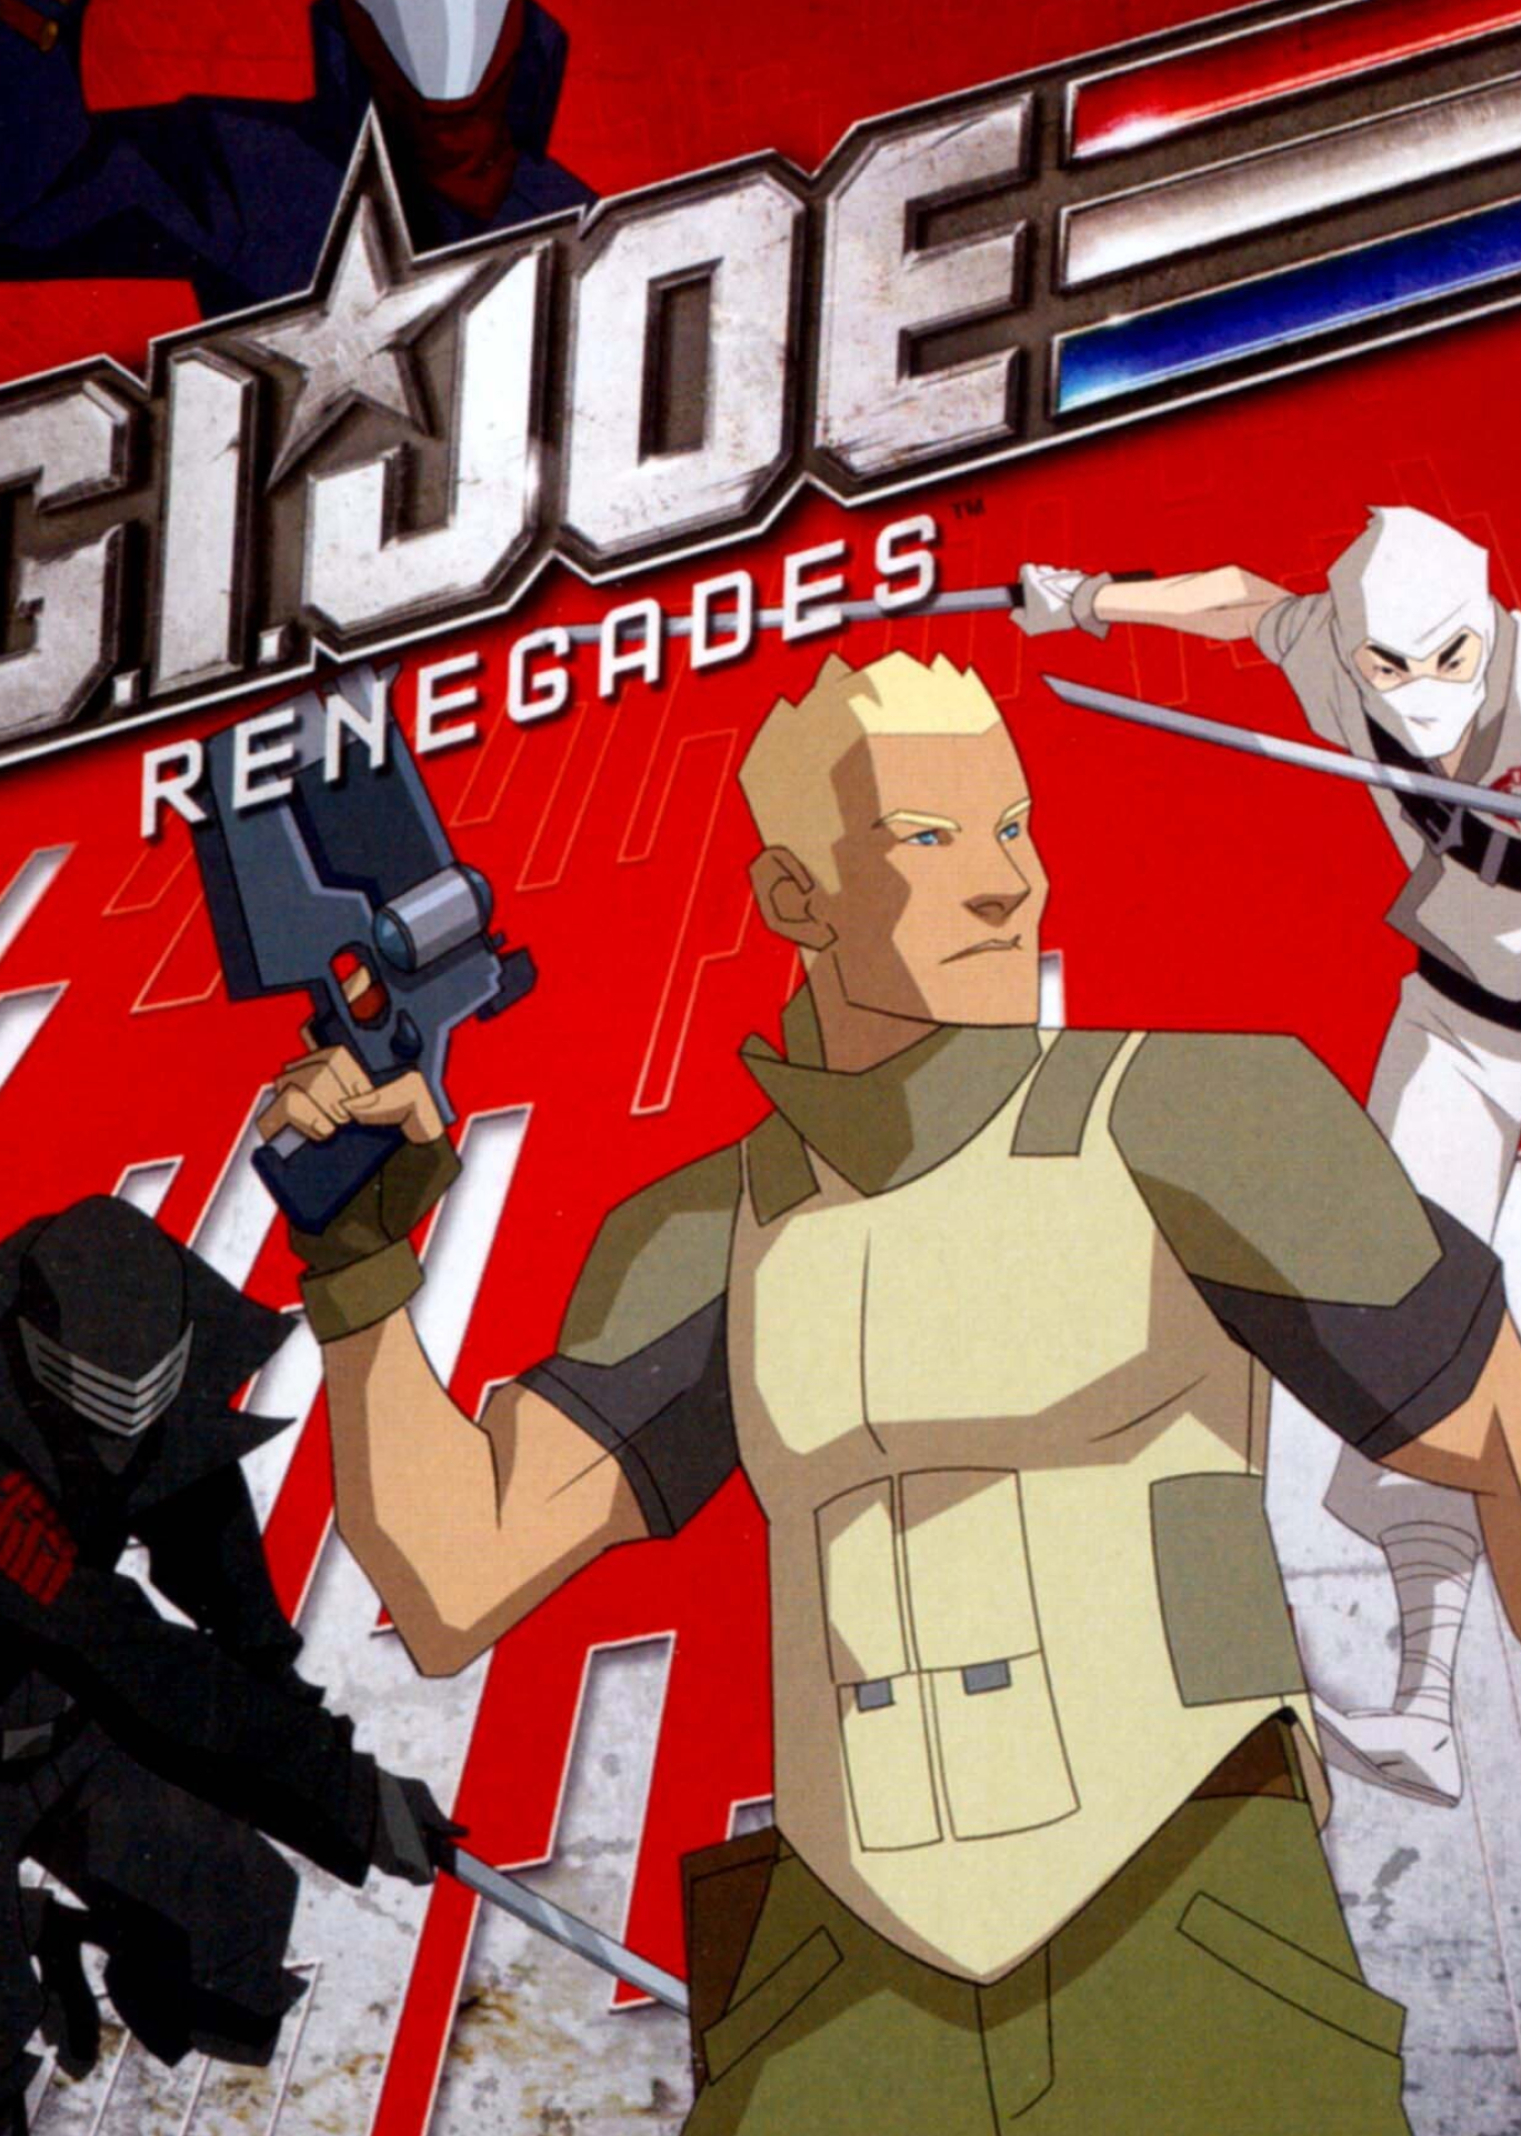 G.I. Joe (Cartoon): Renegades, Animated Action Adventure Series, Henry Gilroy, Marty Isenberg, 2010-2011. 1530x2140 HD Wallpaper.